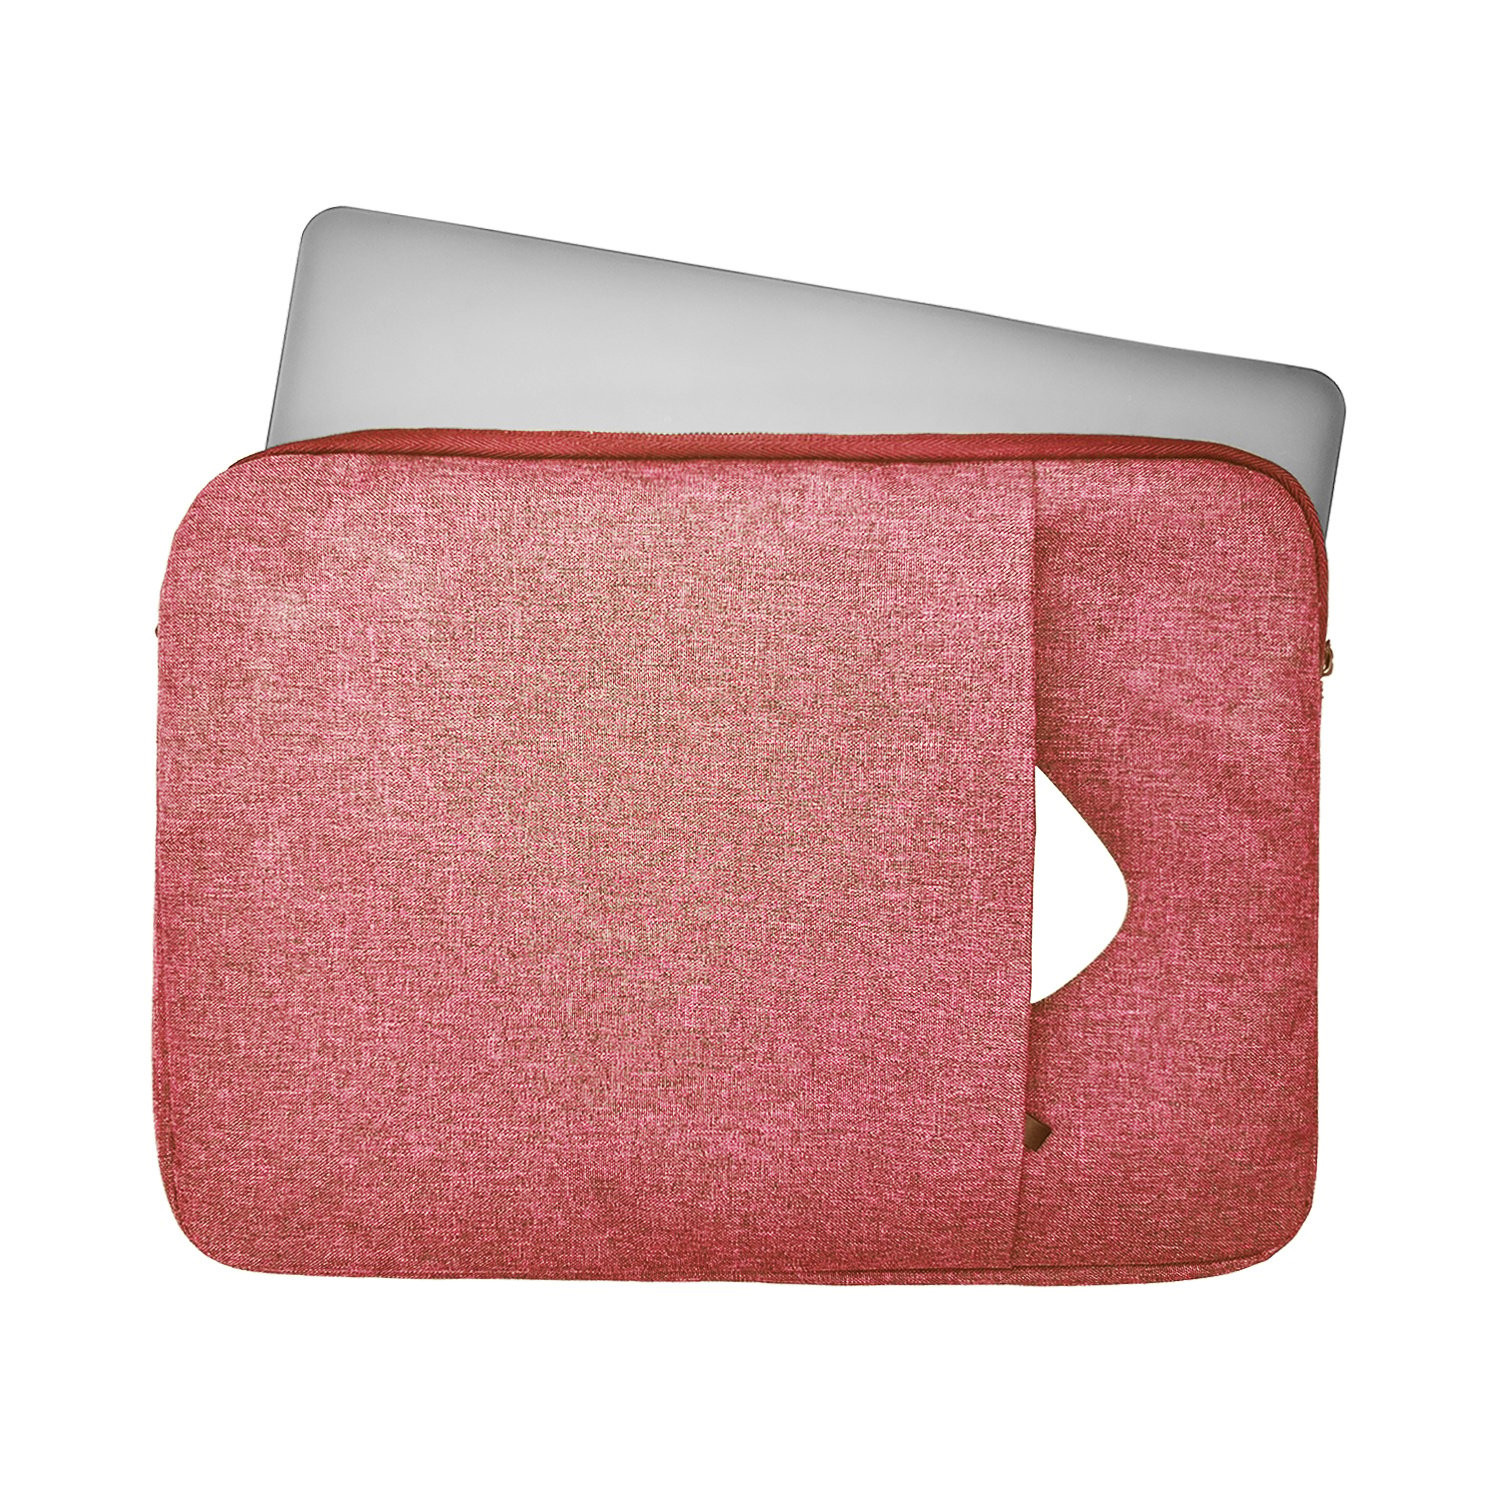 Lunso - Stijlvolle zachte neopreen sleeve hoes 13 inch - Roze